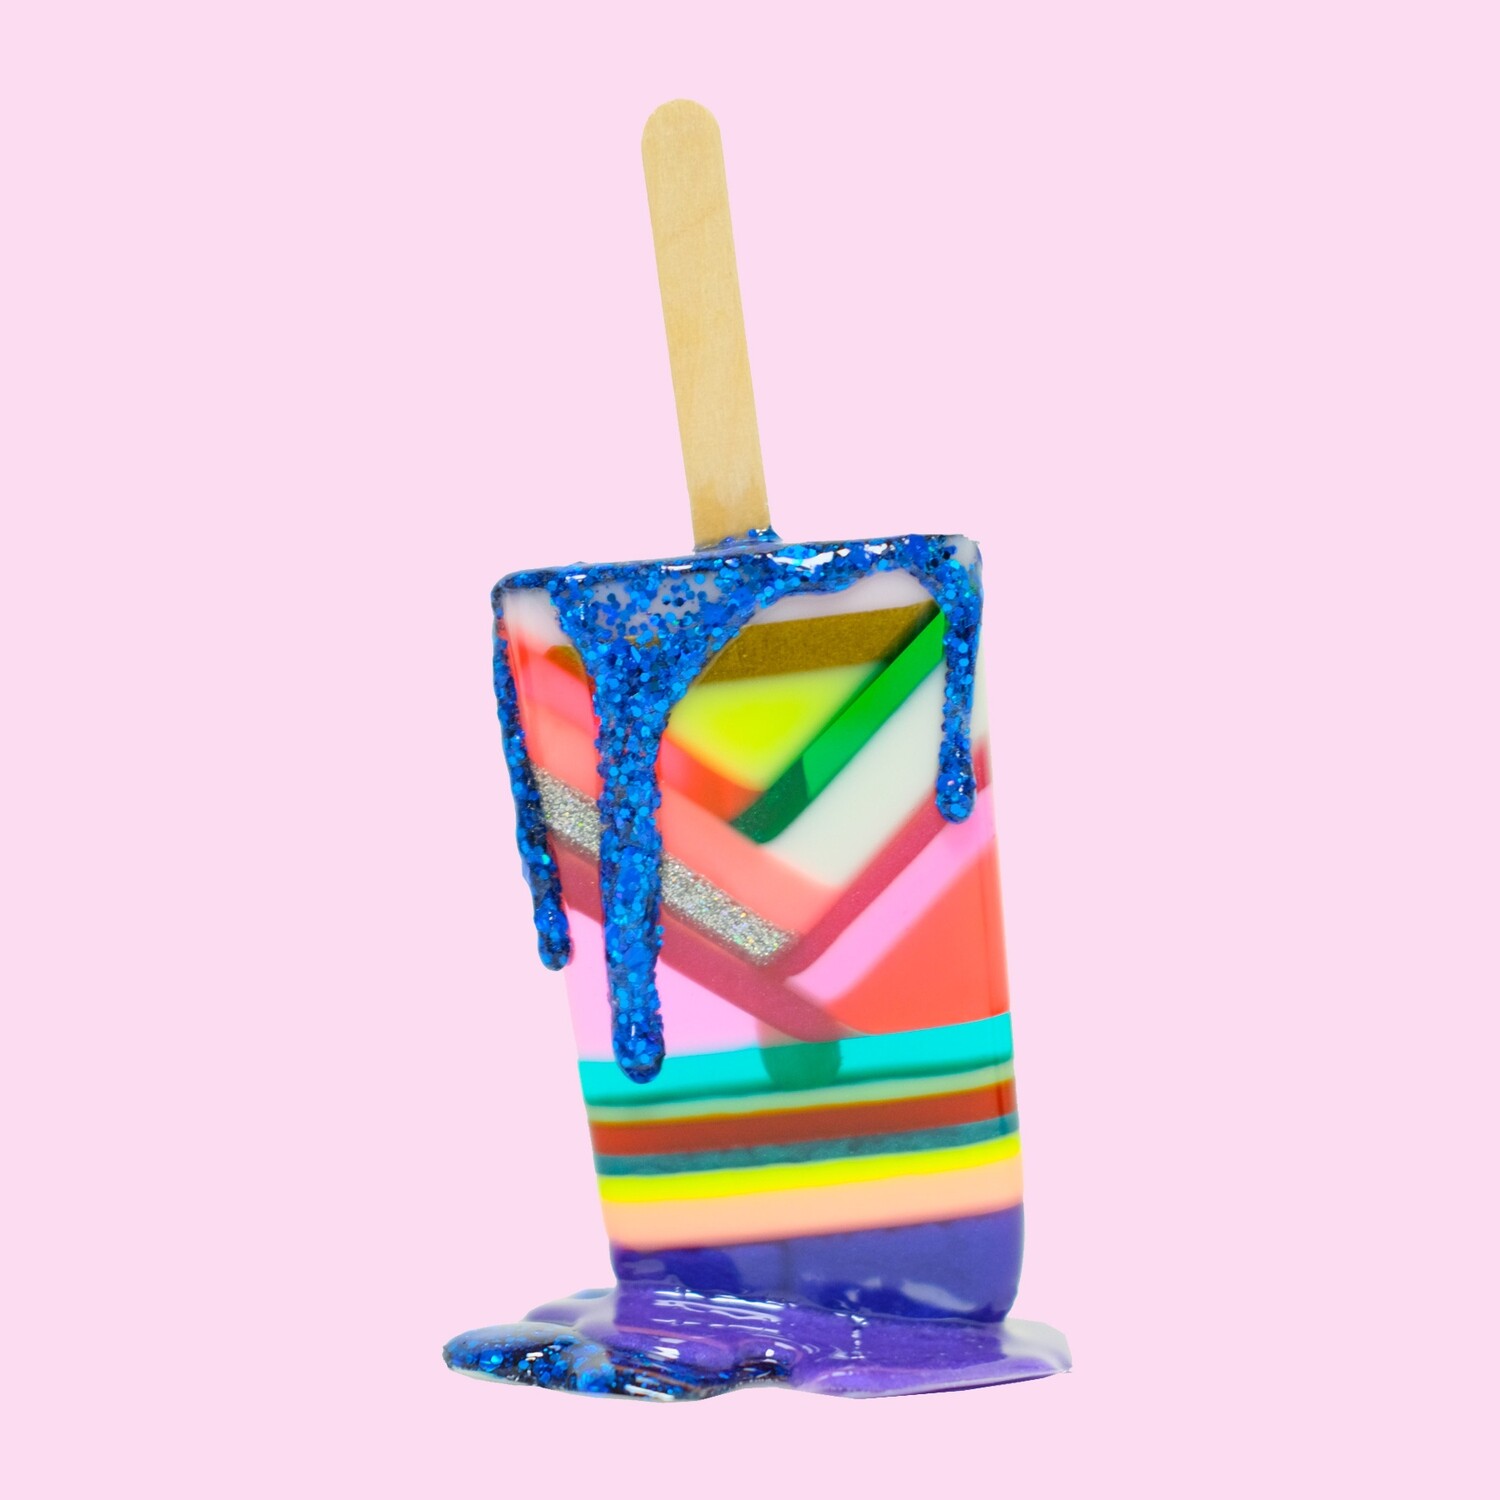 Melting Popsicle Art - Tears Of Joy - Original Melting Pops